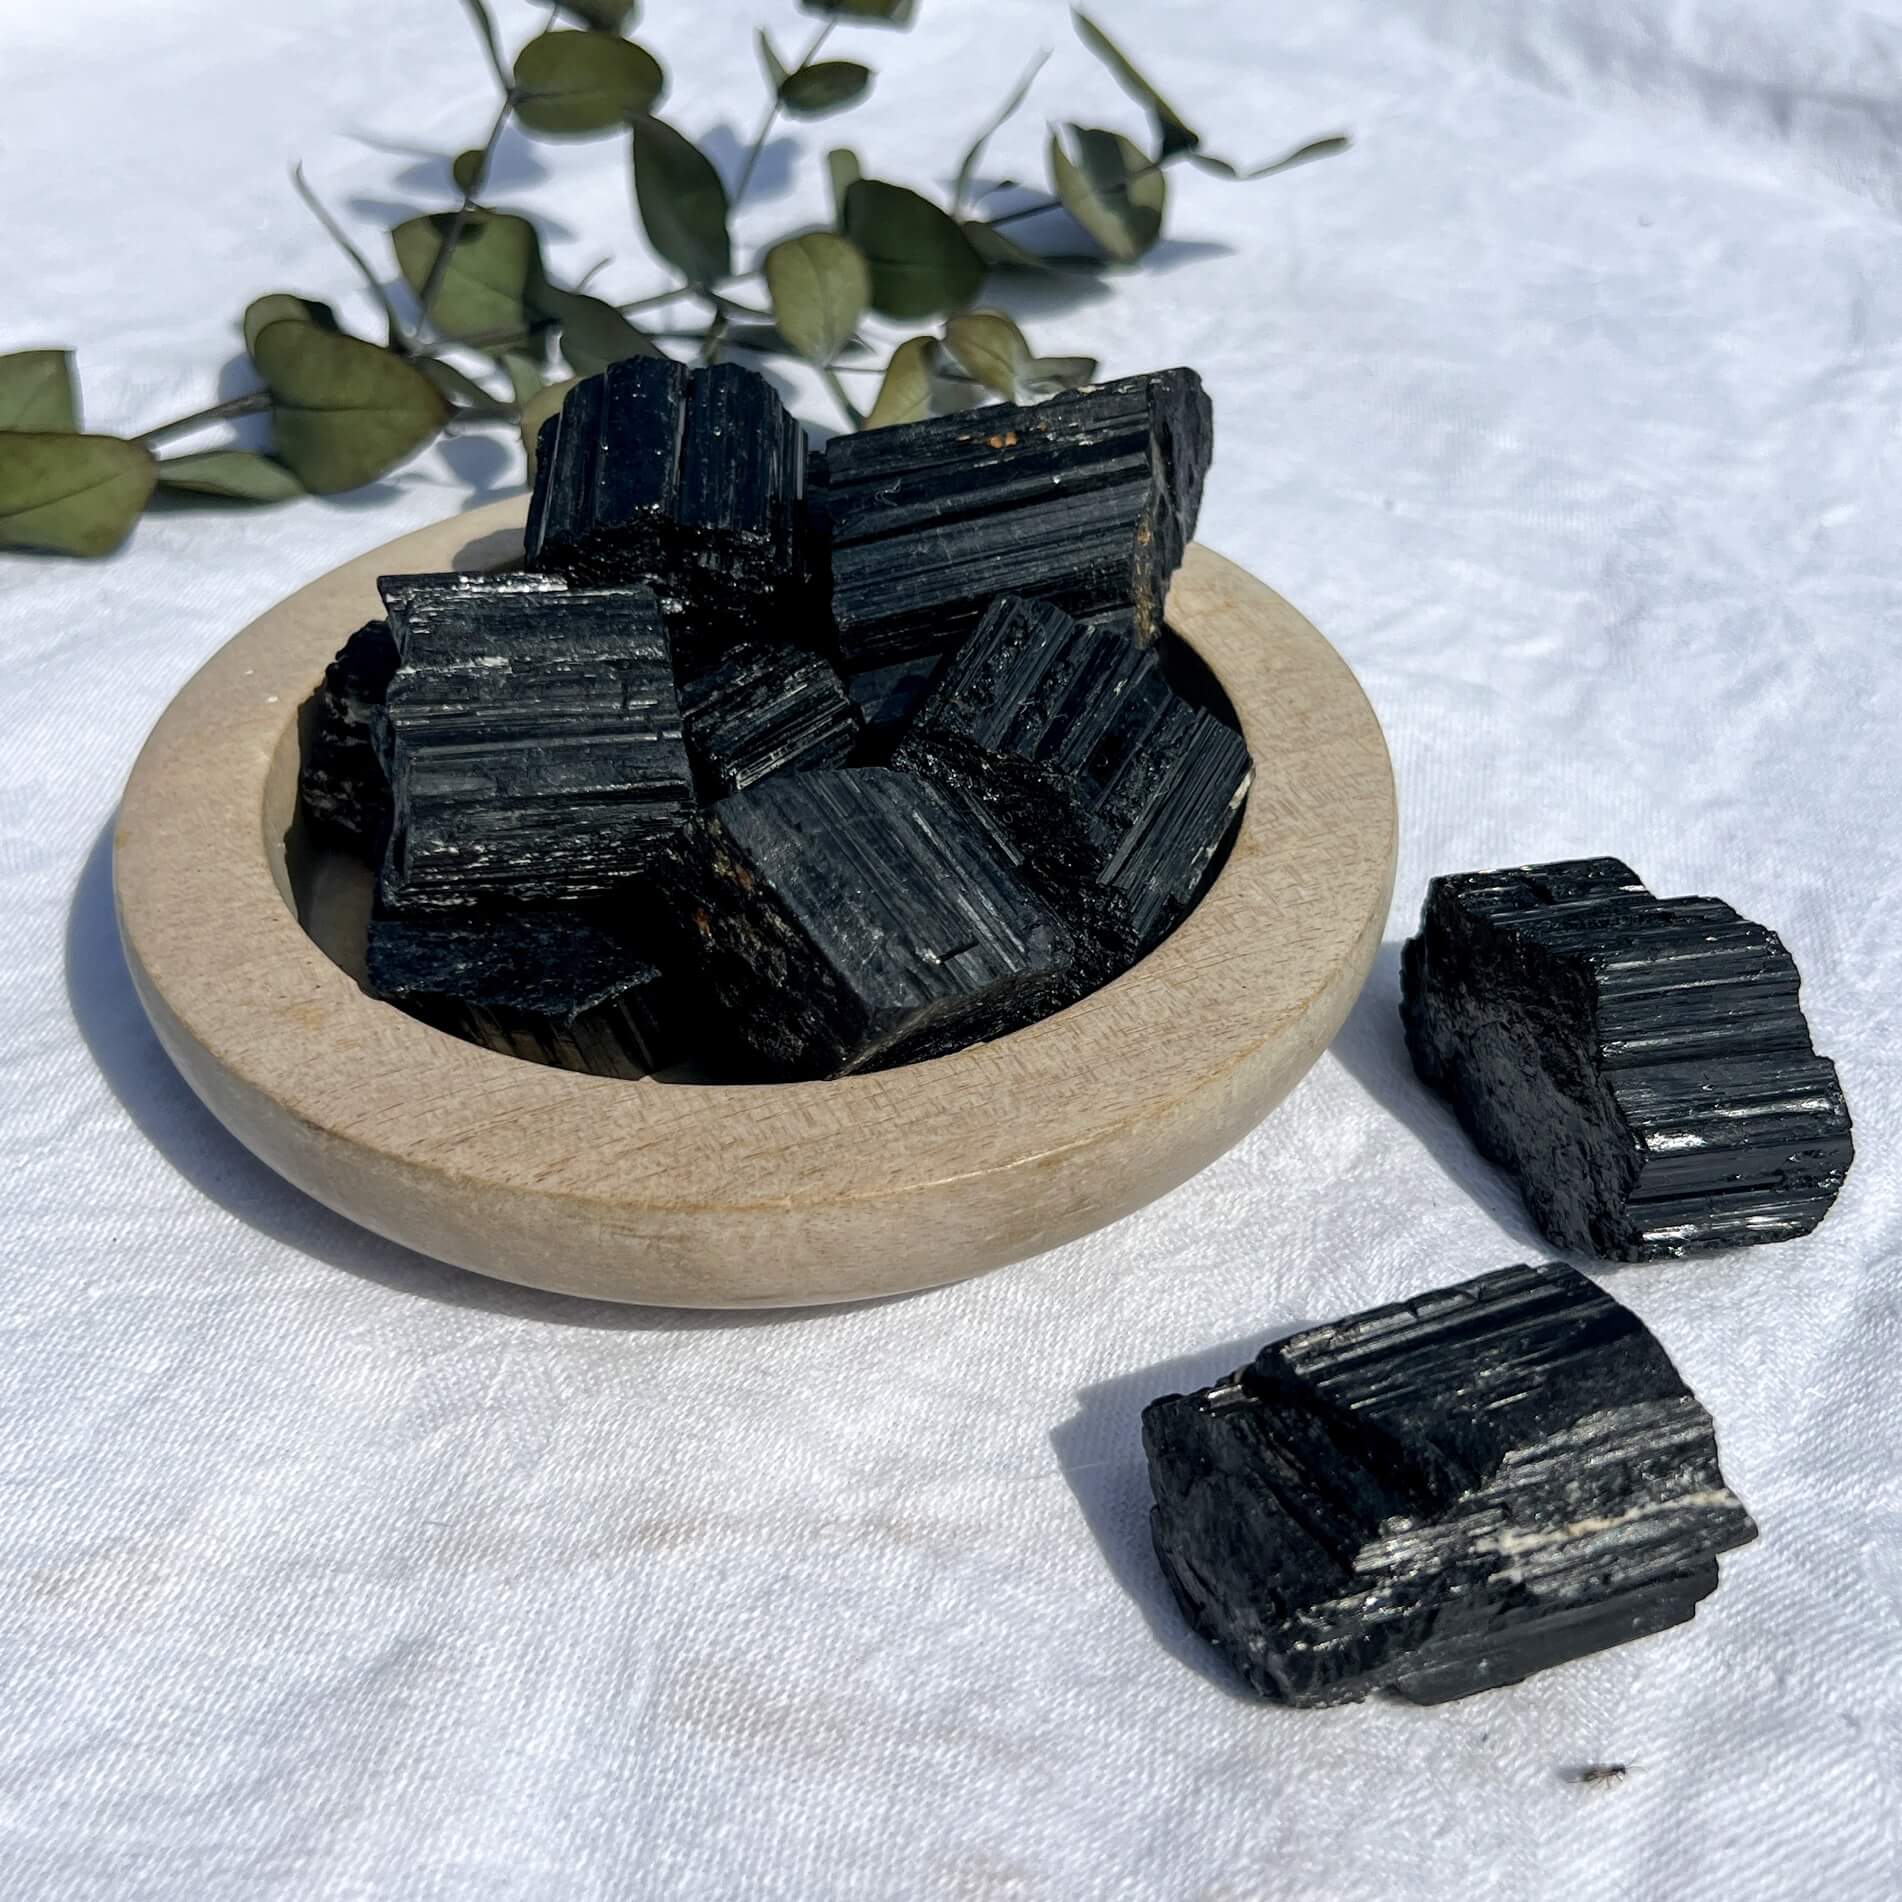 Black Tourmaline Raw Crystals and Healing Stones, Natural Rocks for Tumbling  and DIY Raw Stones and Crystals (2 Pieces) 2 Pieces Black Tourmaline